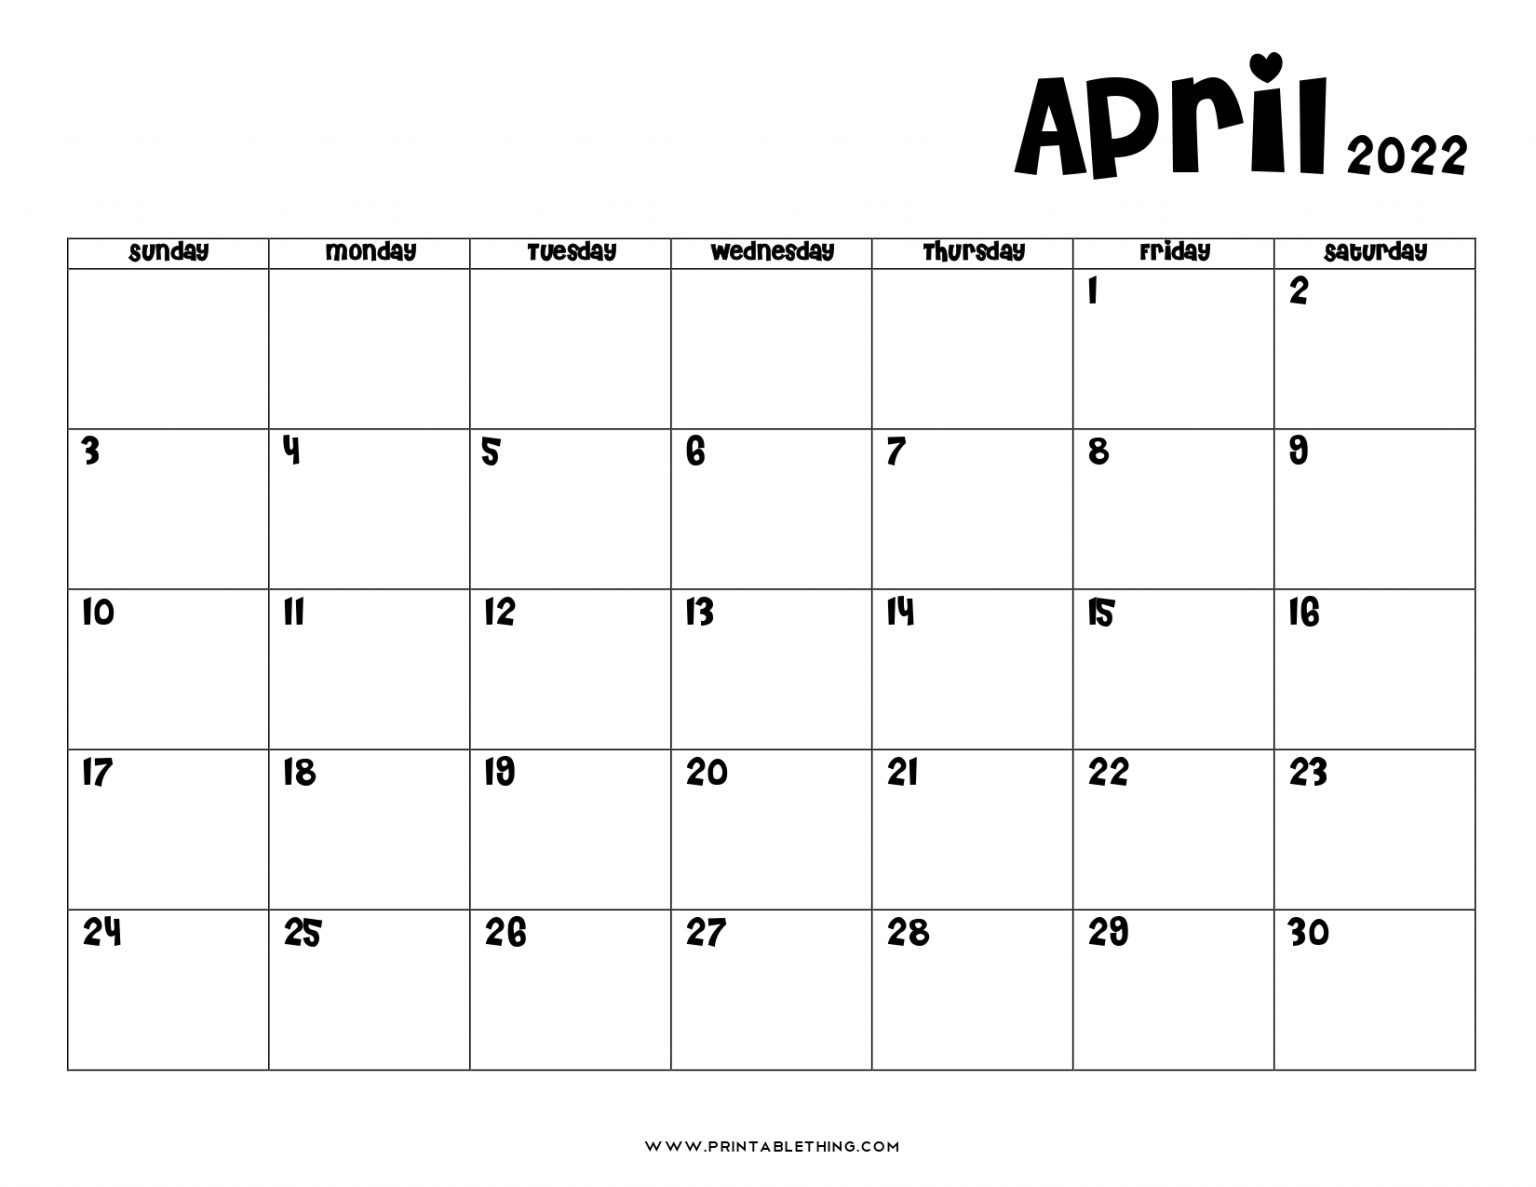 Catch April 2022 Calendar With Us Holidays